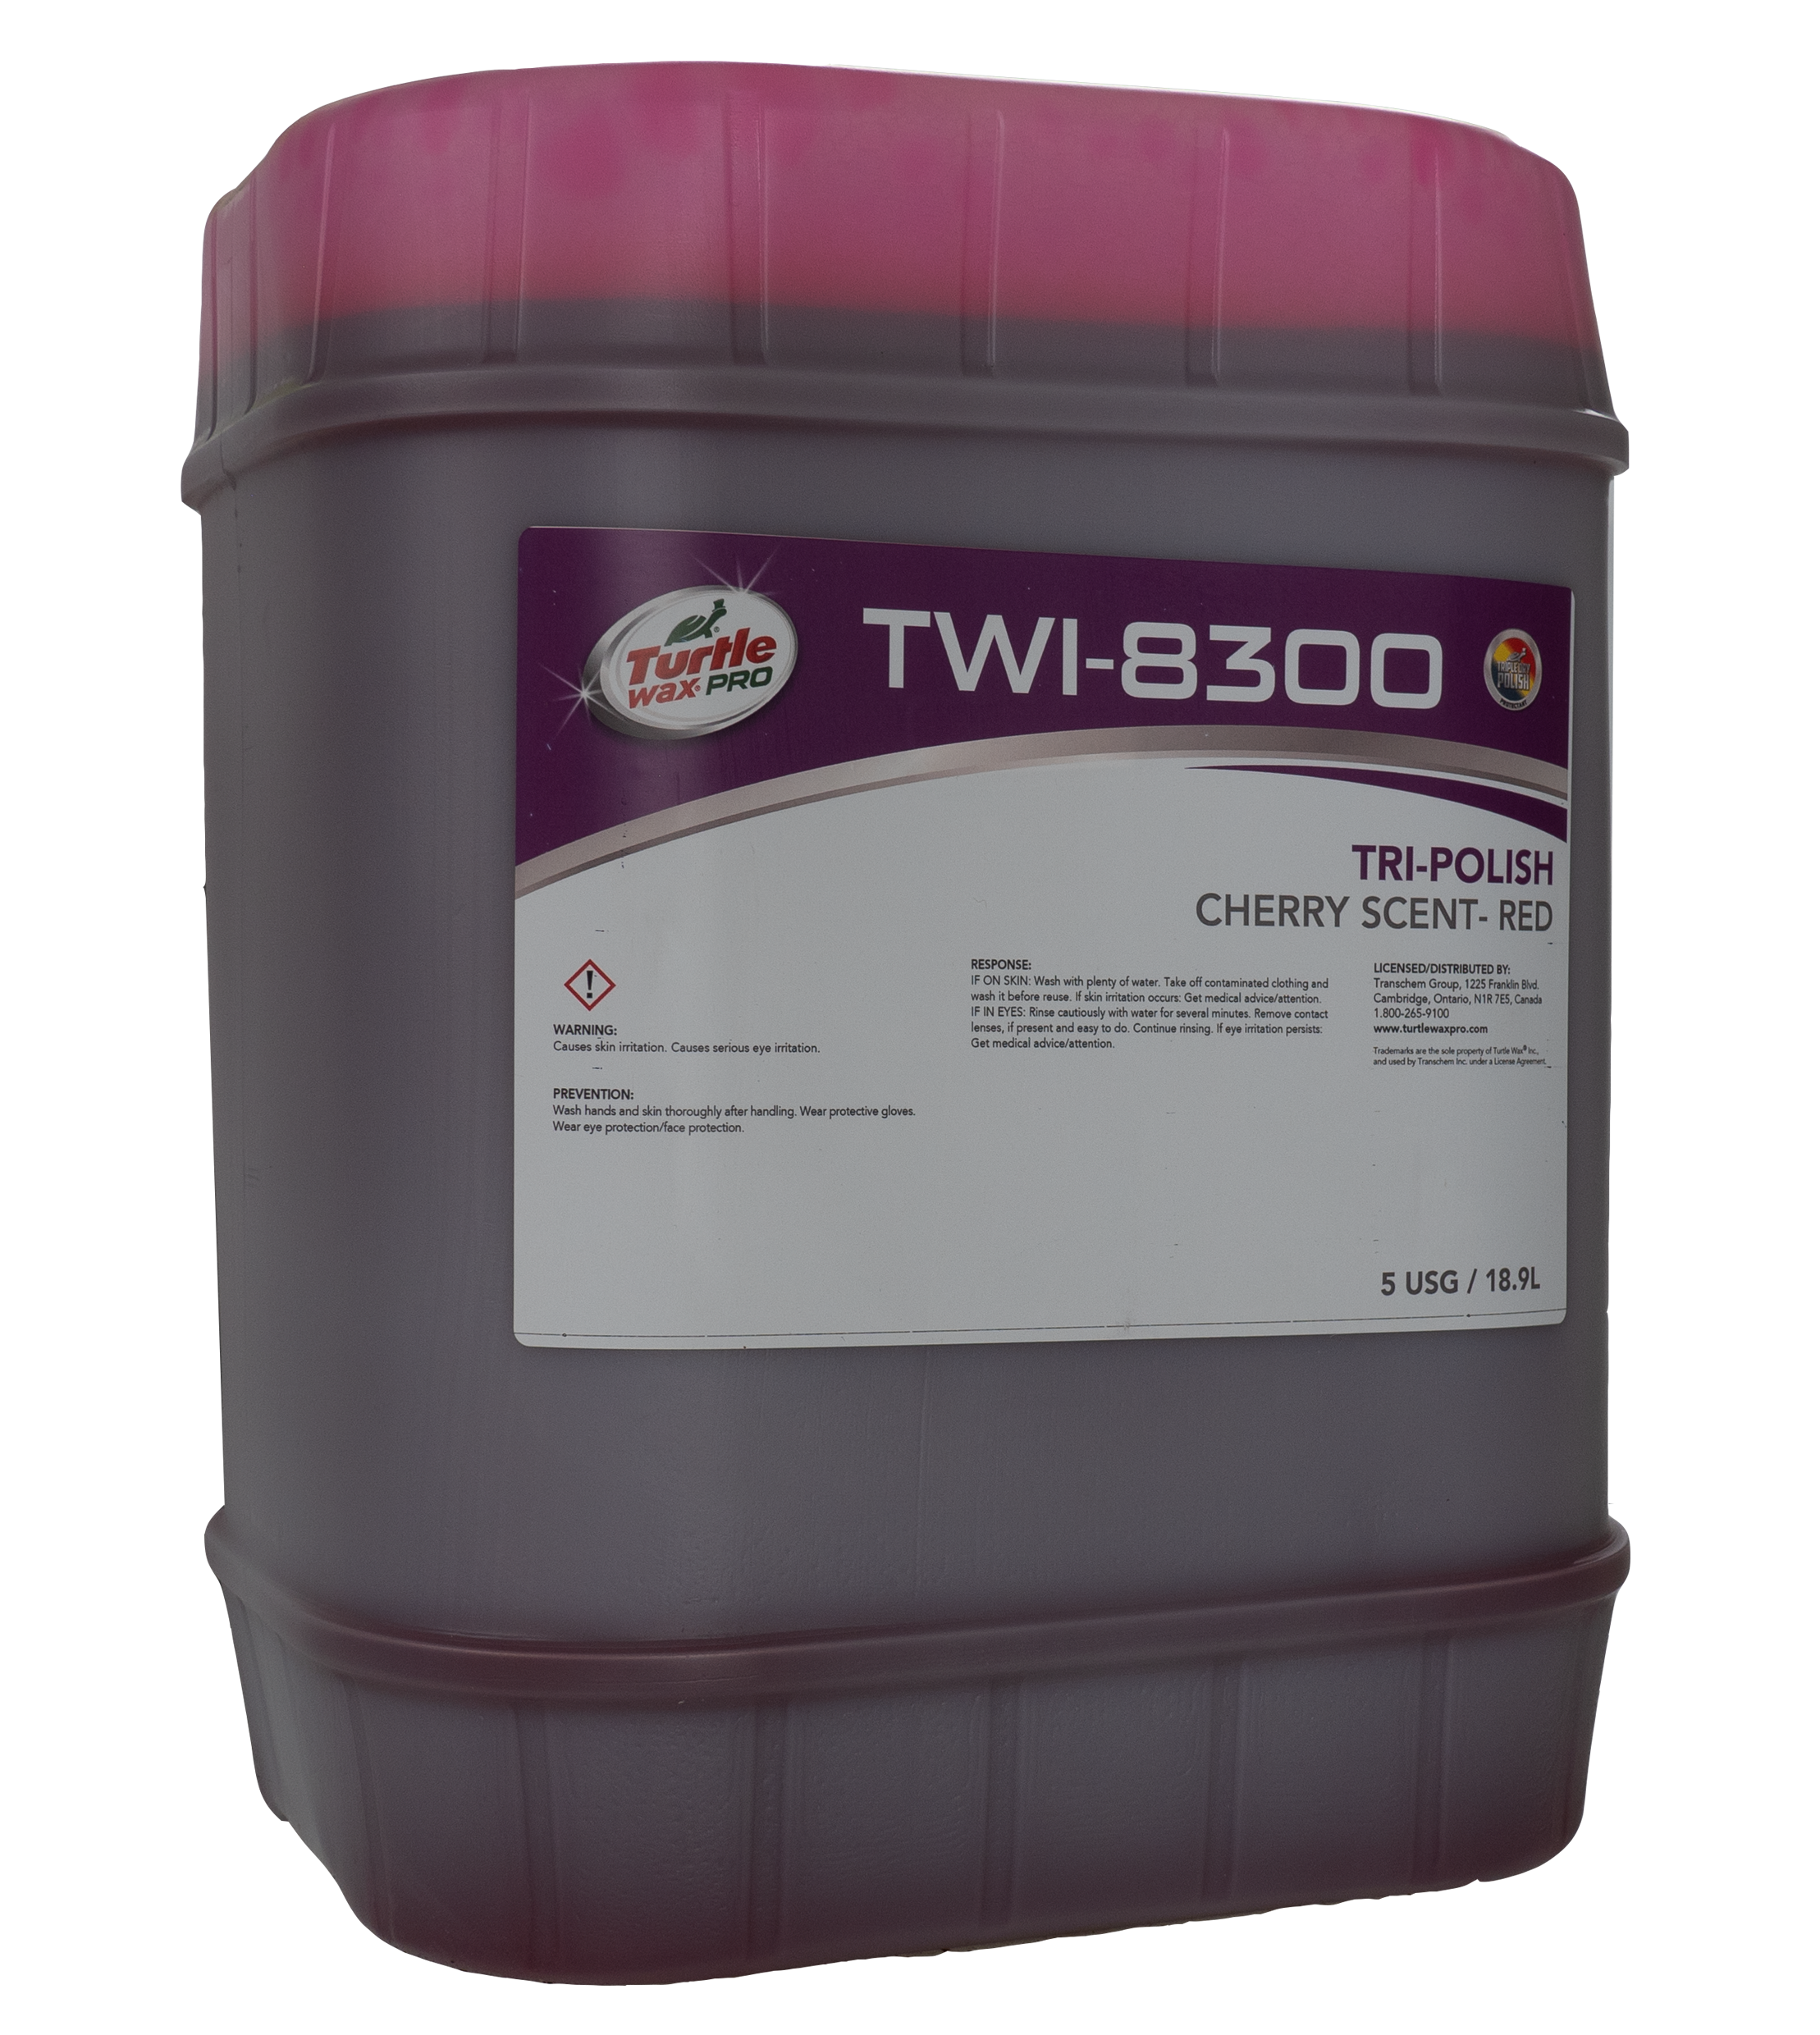 TWI 8300 - Turtle Wax® Pro Tri-Polish with Cherry Scent, Red